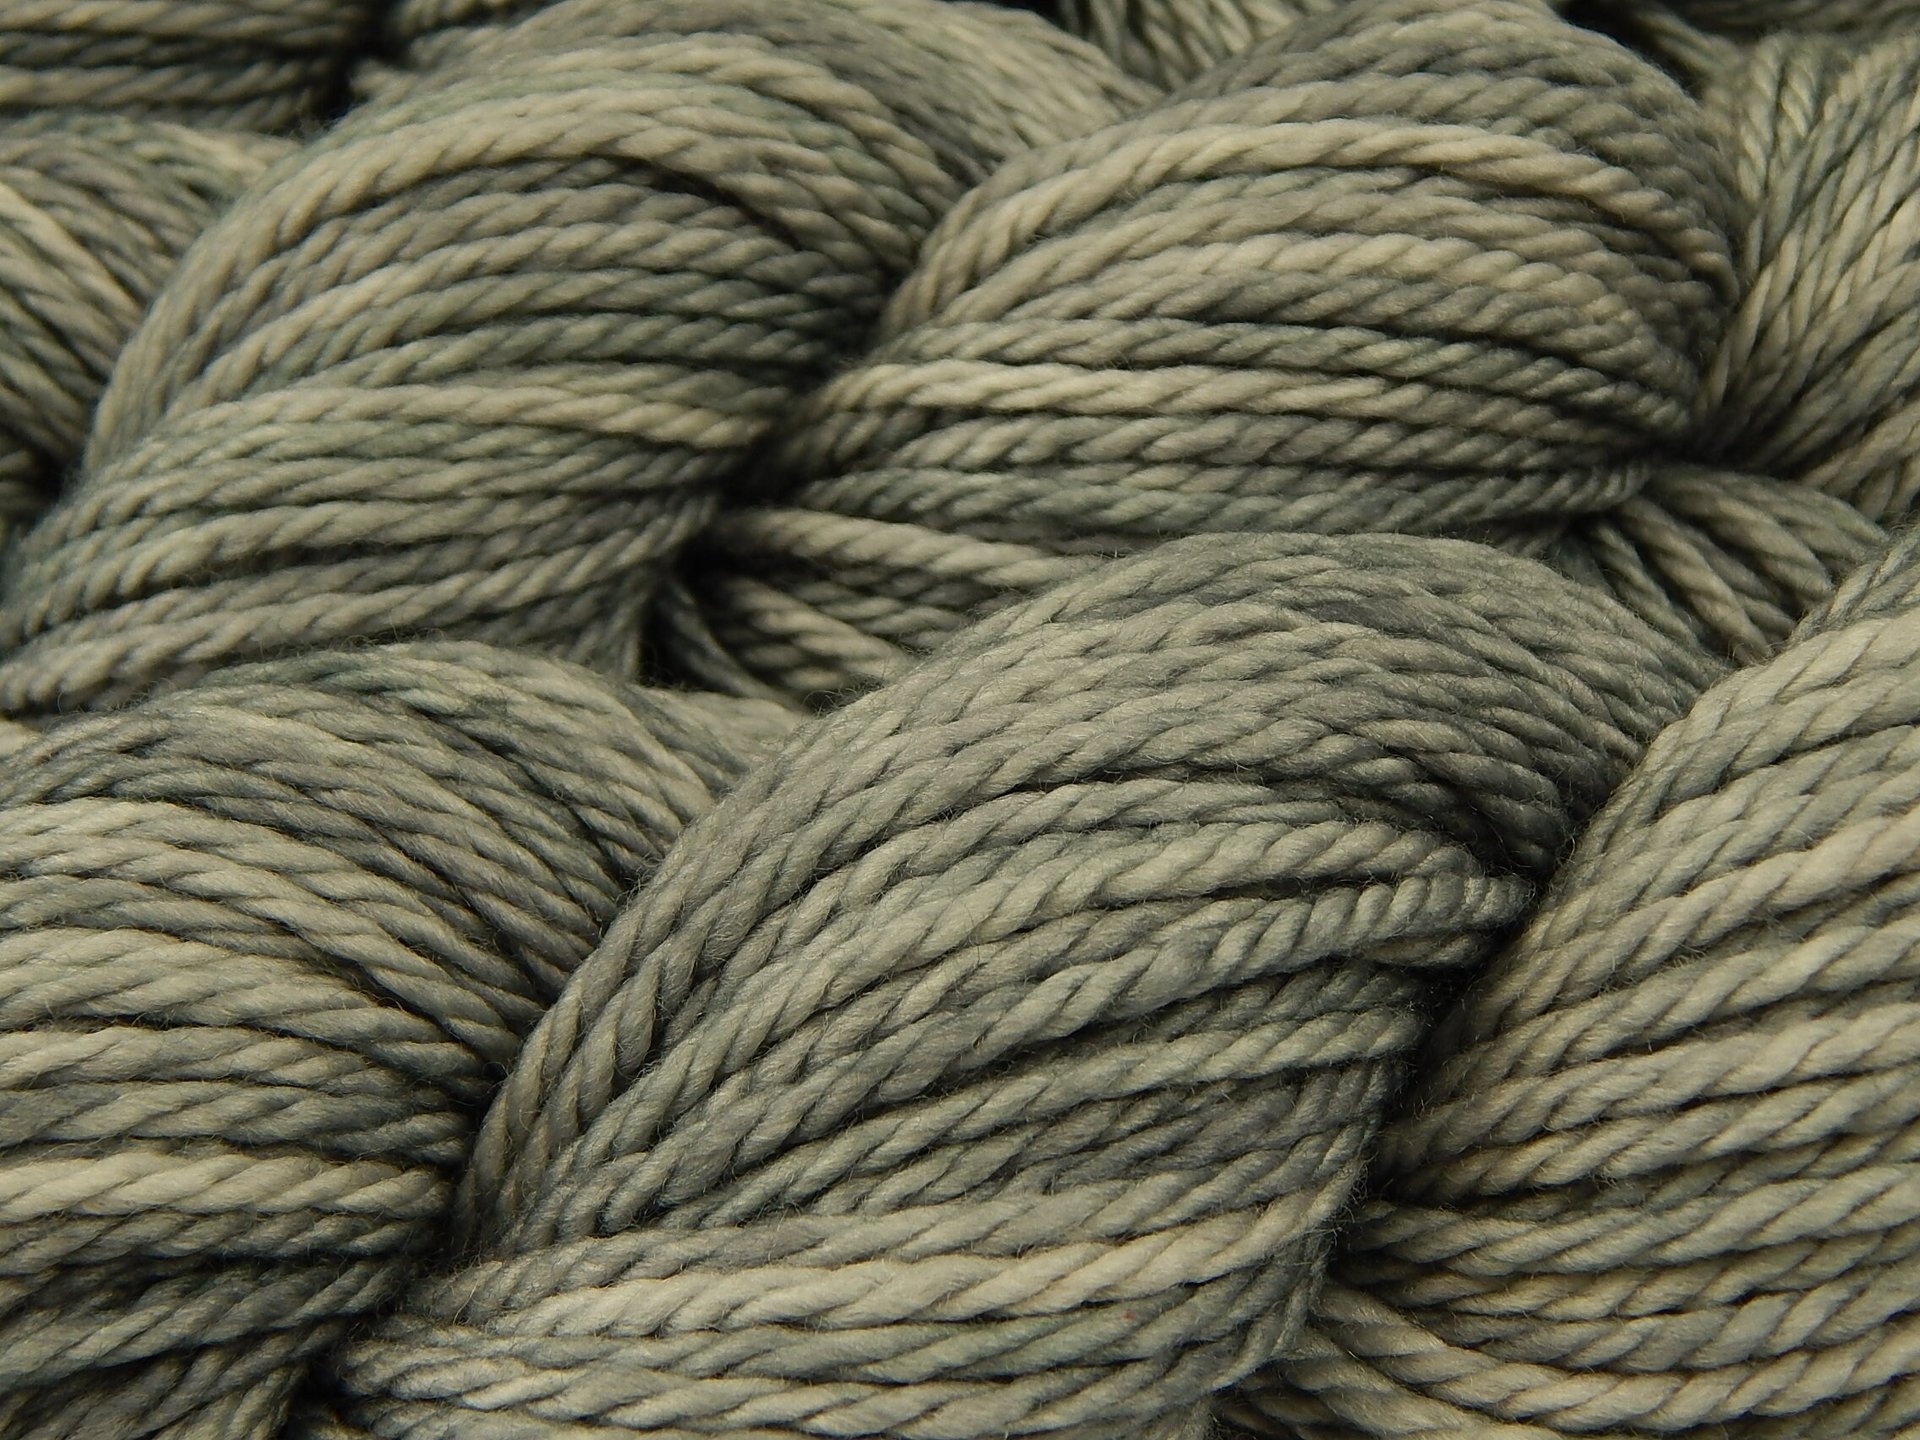 Hand Dyed Yarn, Bulky Weight Superwash Merino Wool - Silver Lining - Indie Dyer Thick Light Grey Knitting Yarn, Tonal Gray Chunky Yarn